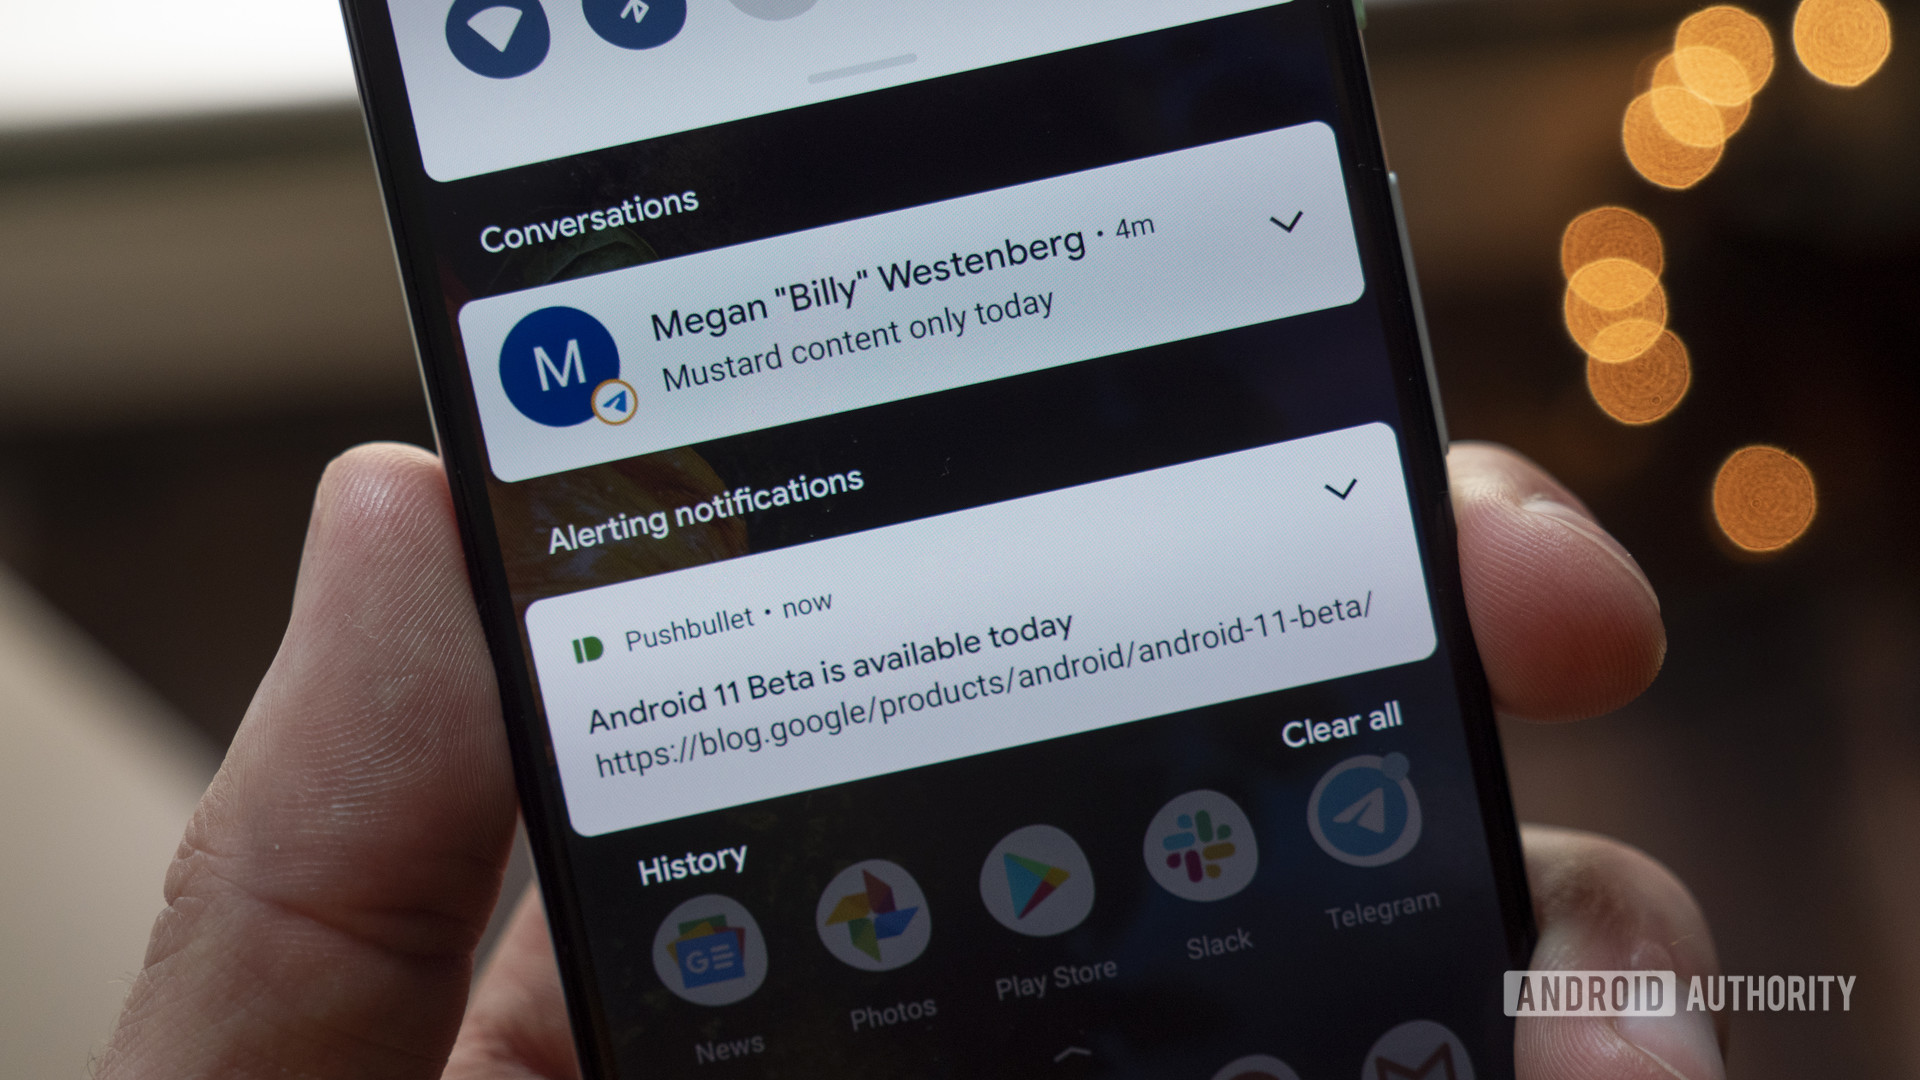 android 11 beta priority conversations telegram pushbullet 1